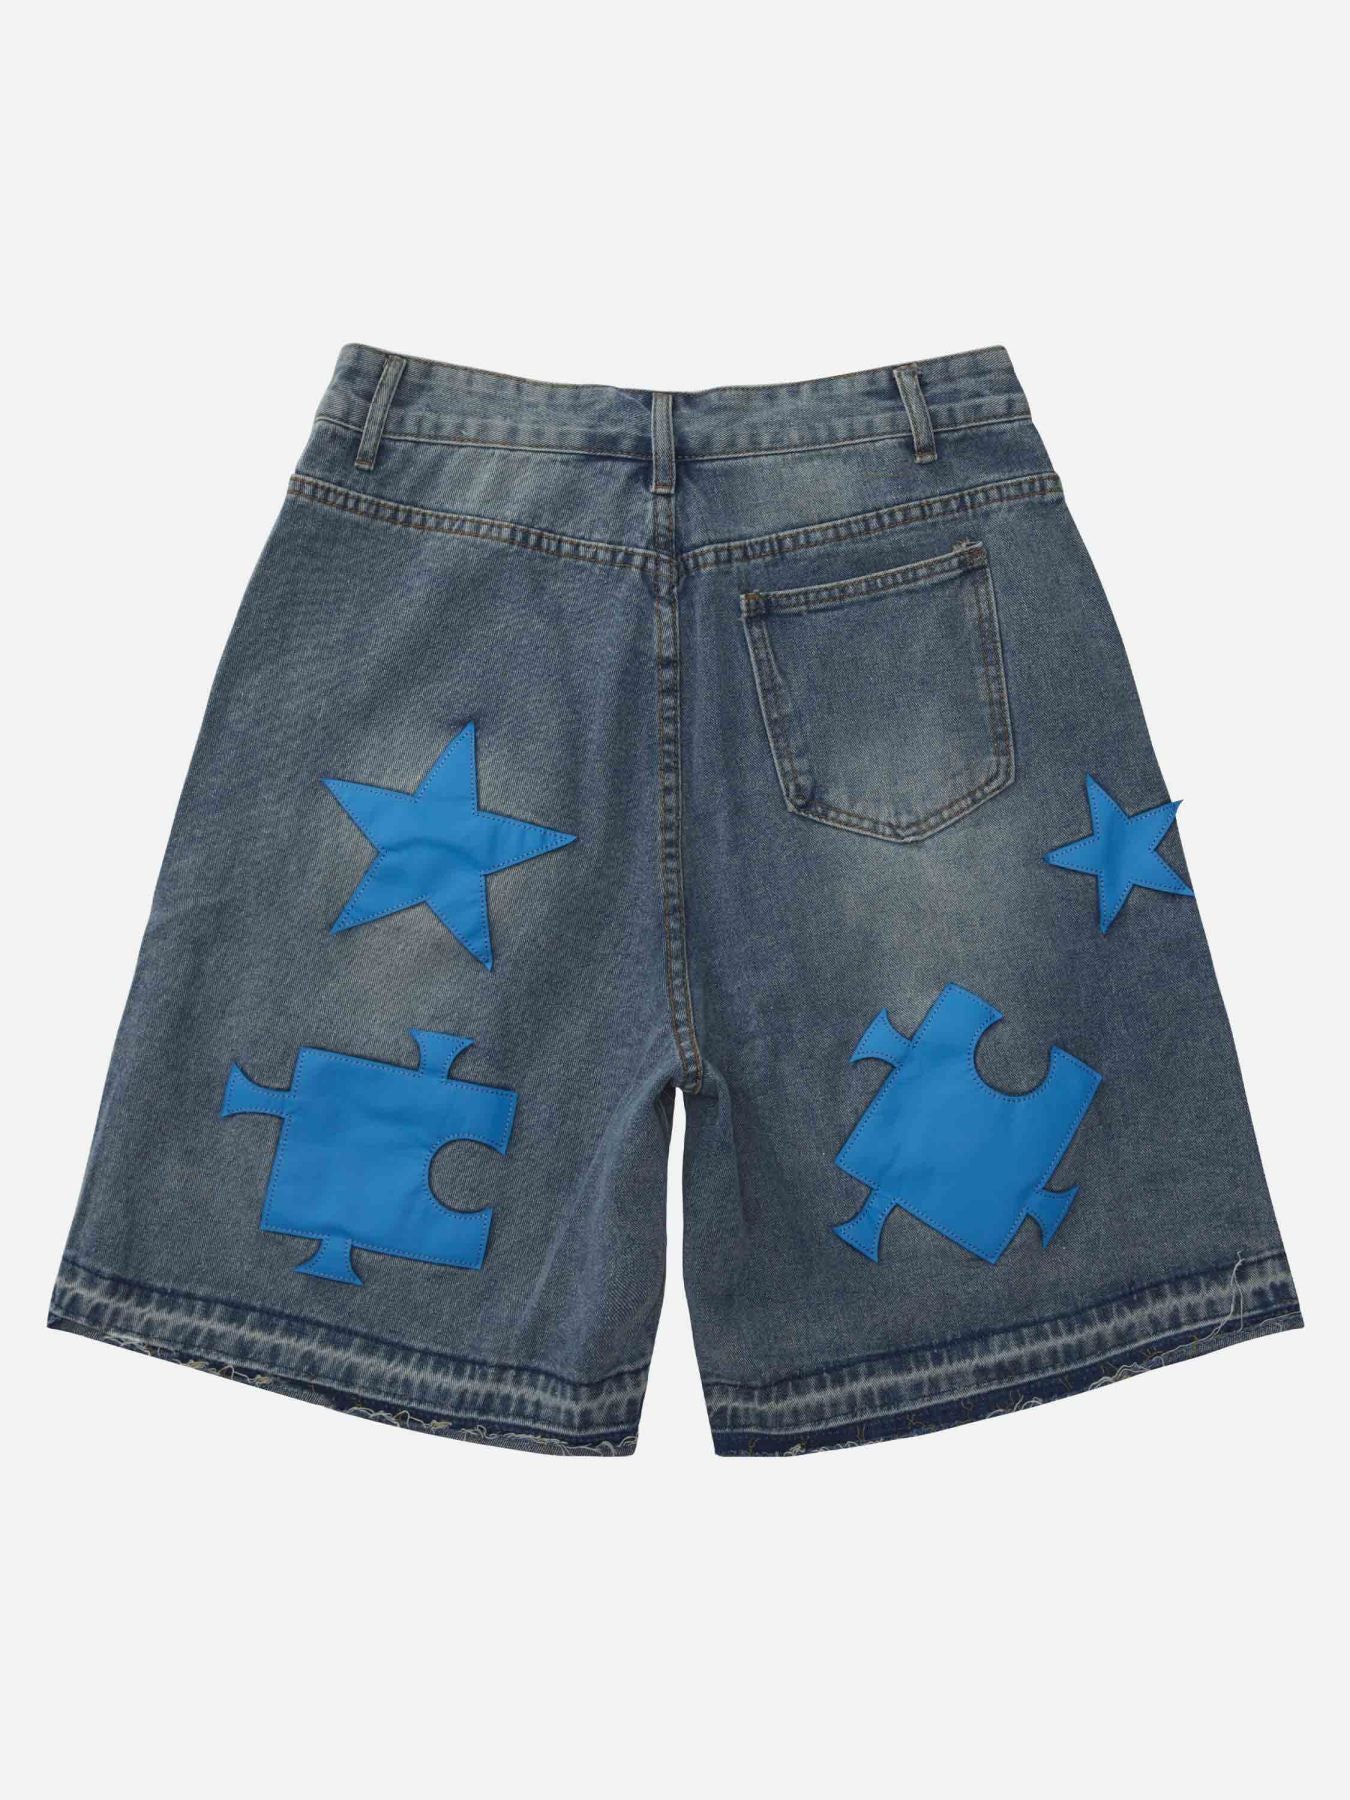 Thesupermade Star Embroidered Denim Shorts Jorts